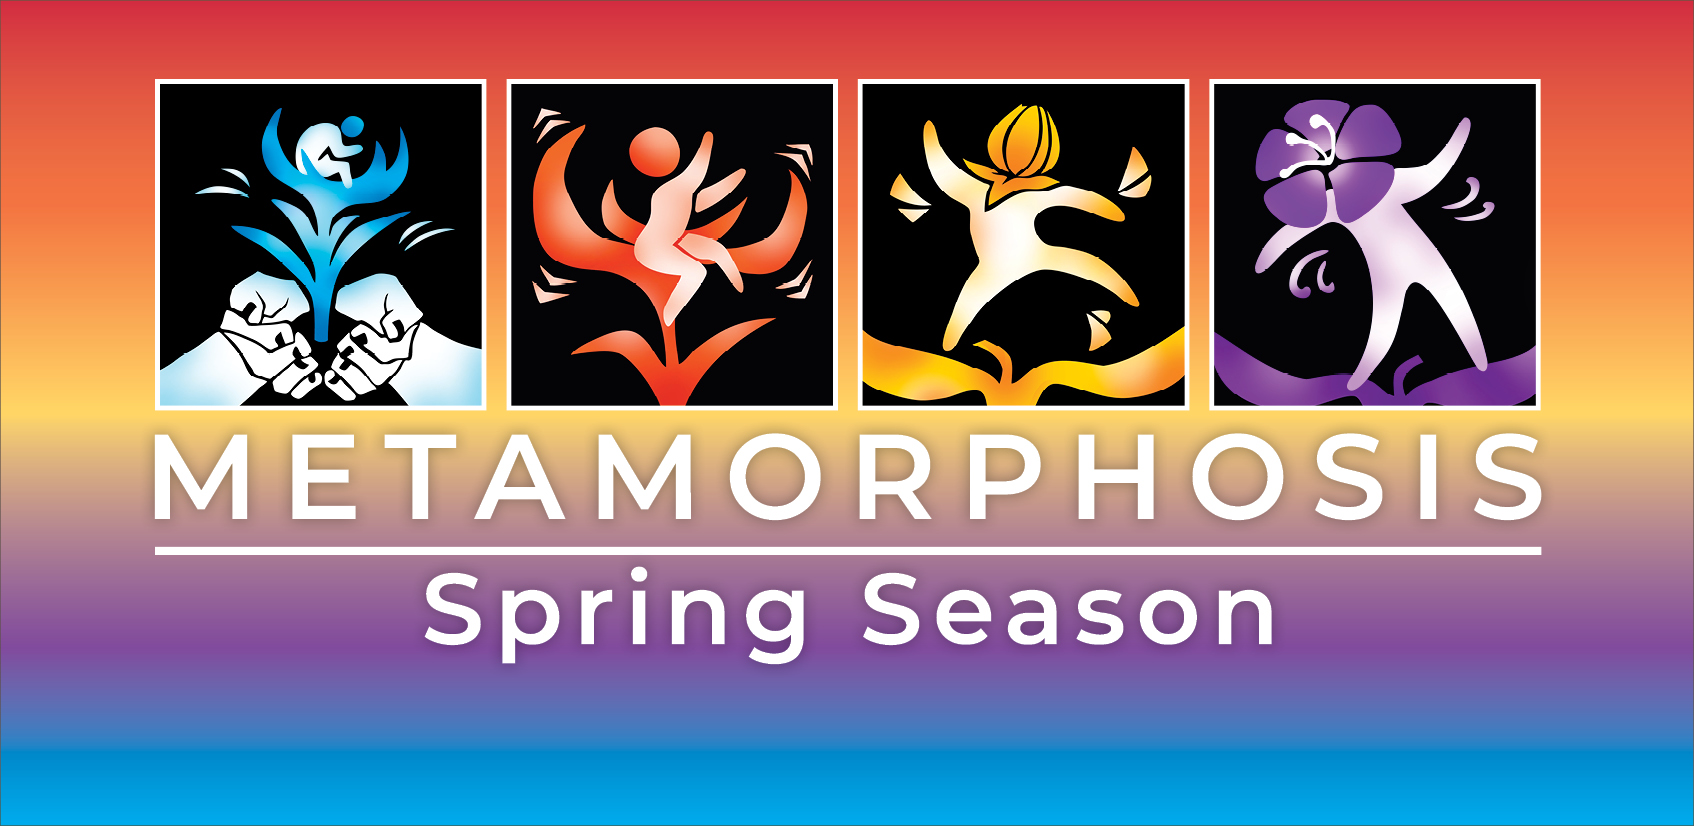 Metamorphosis Spring Show Season Banner